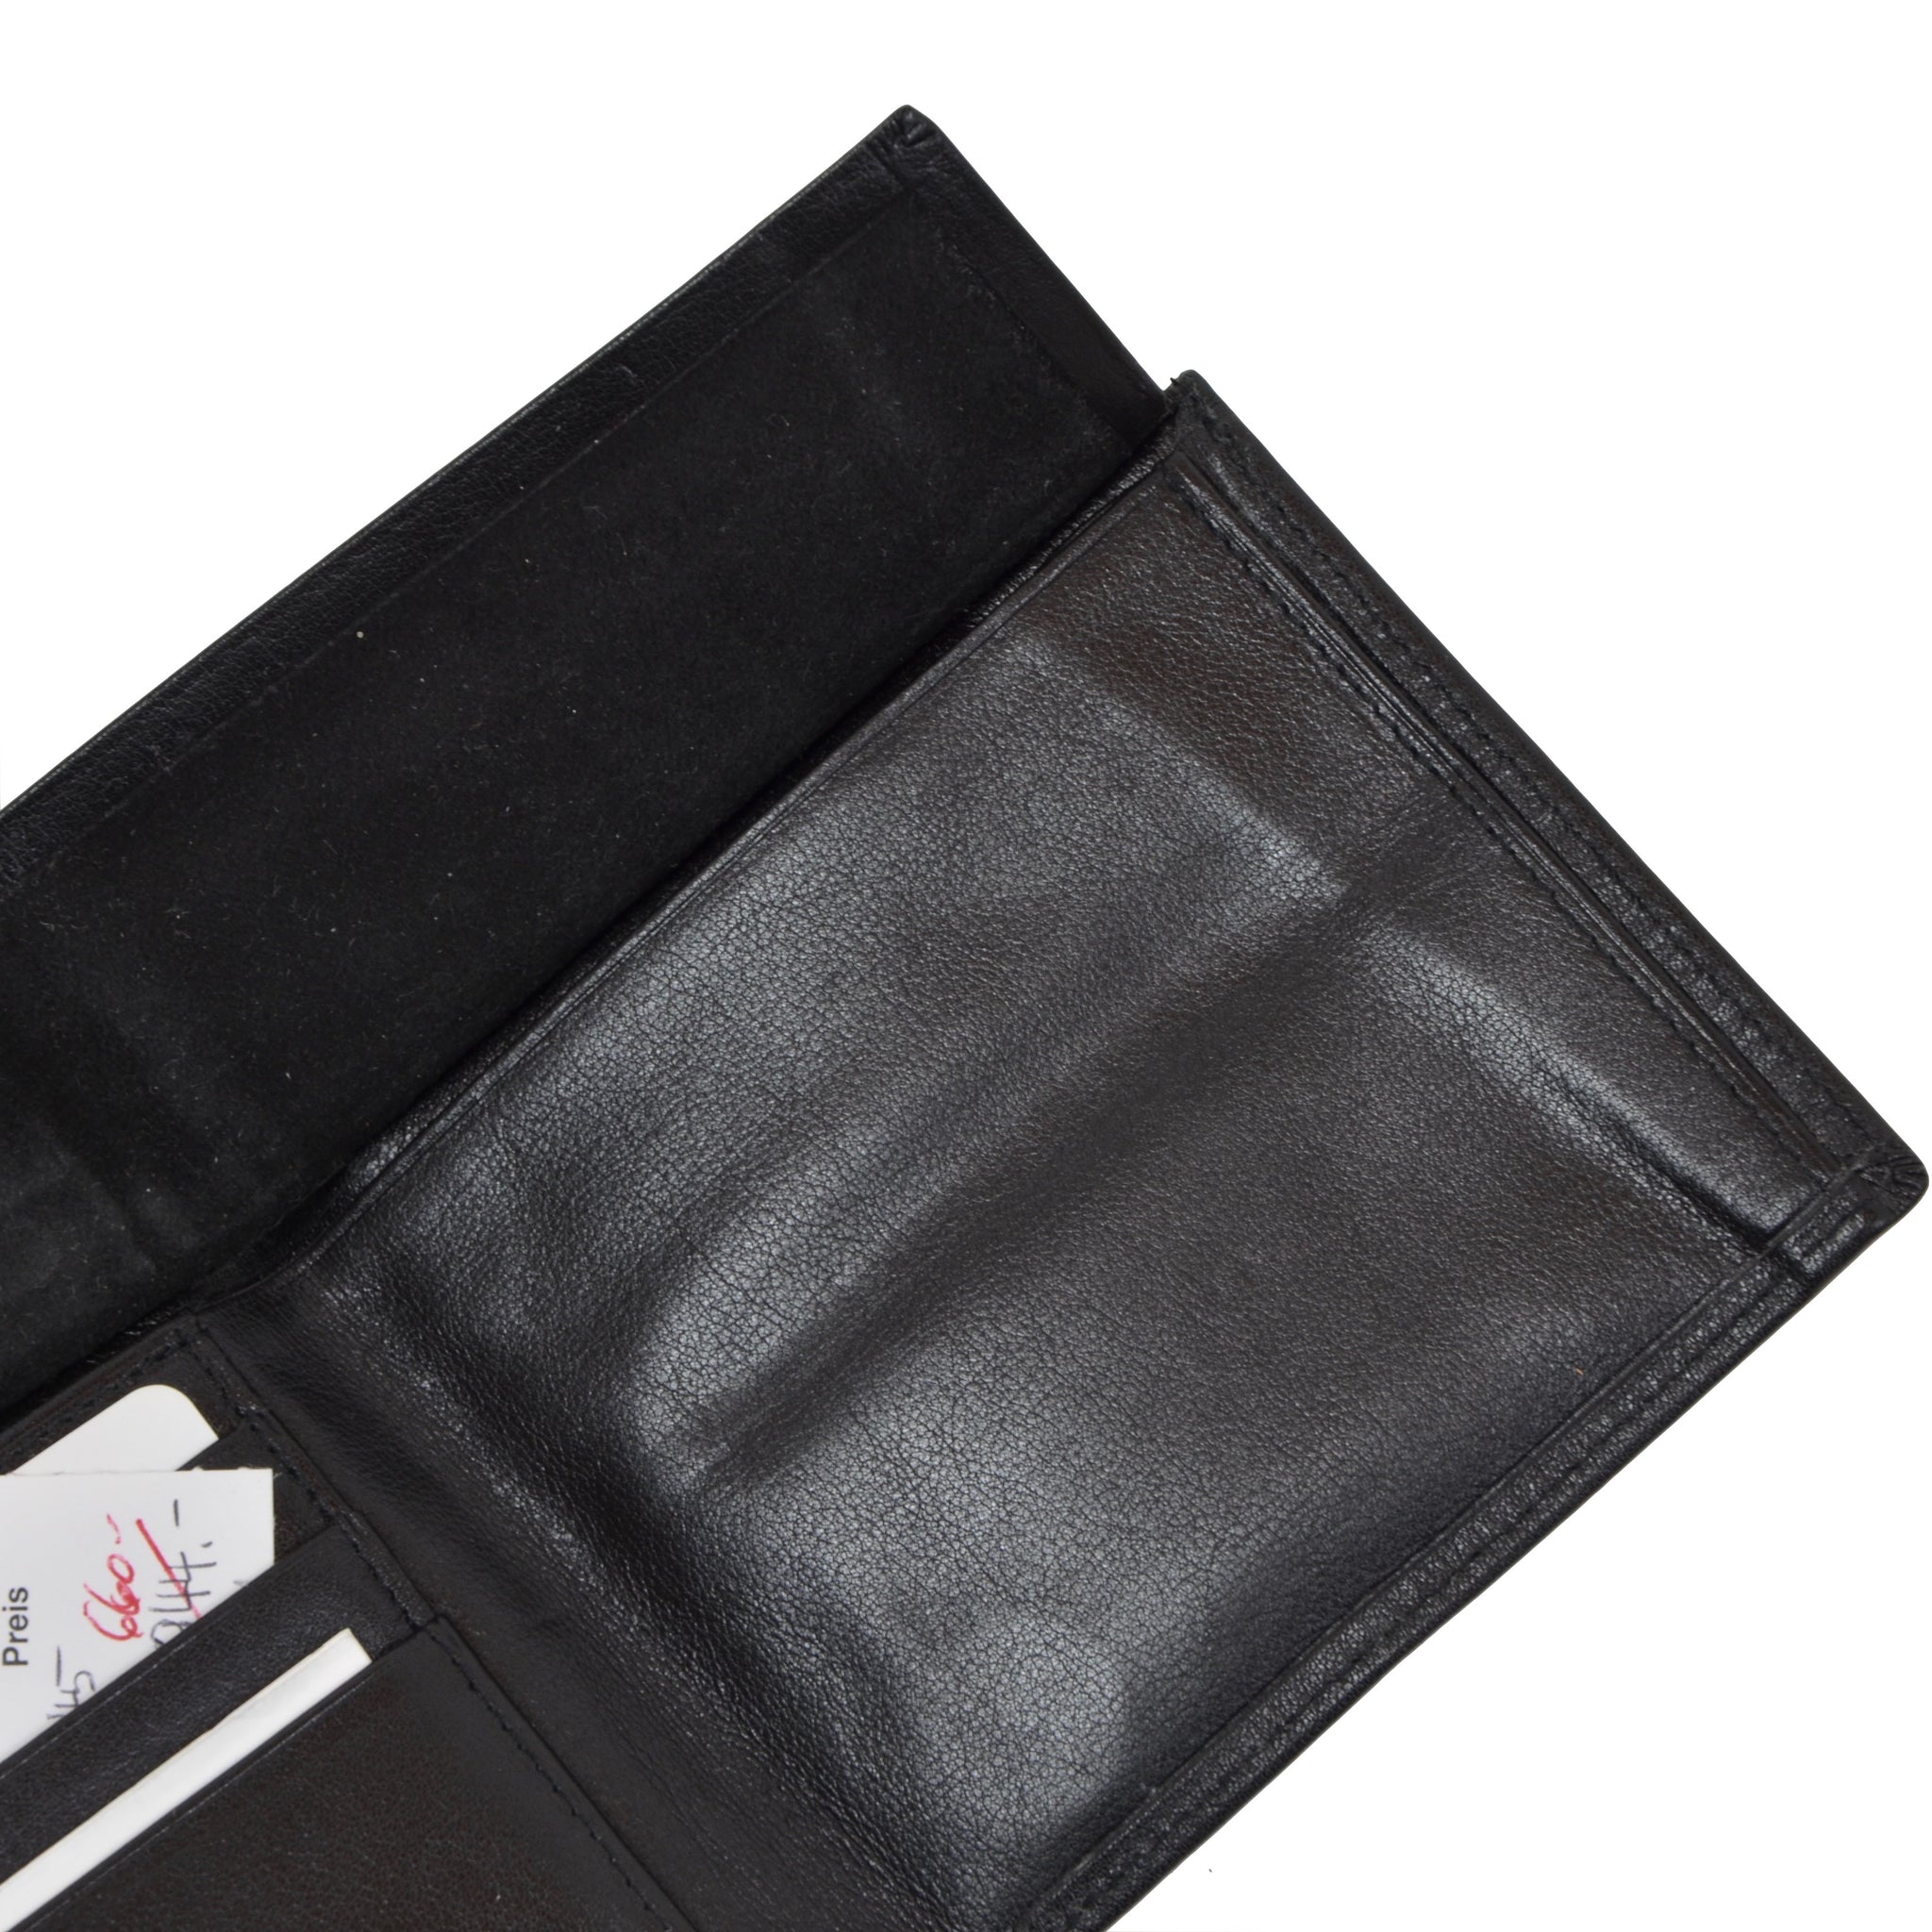 Samsonite Leather Billfold/Wallet - Brown – Leot James